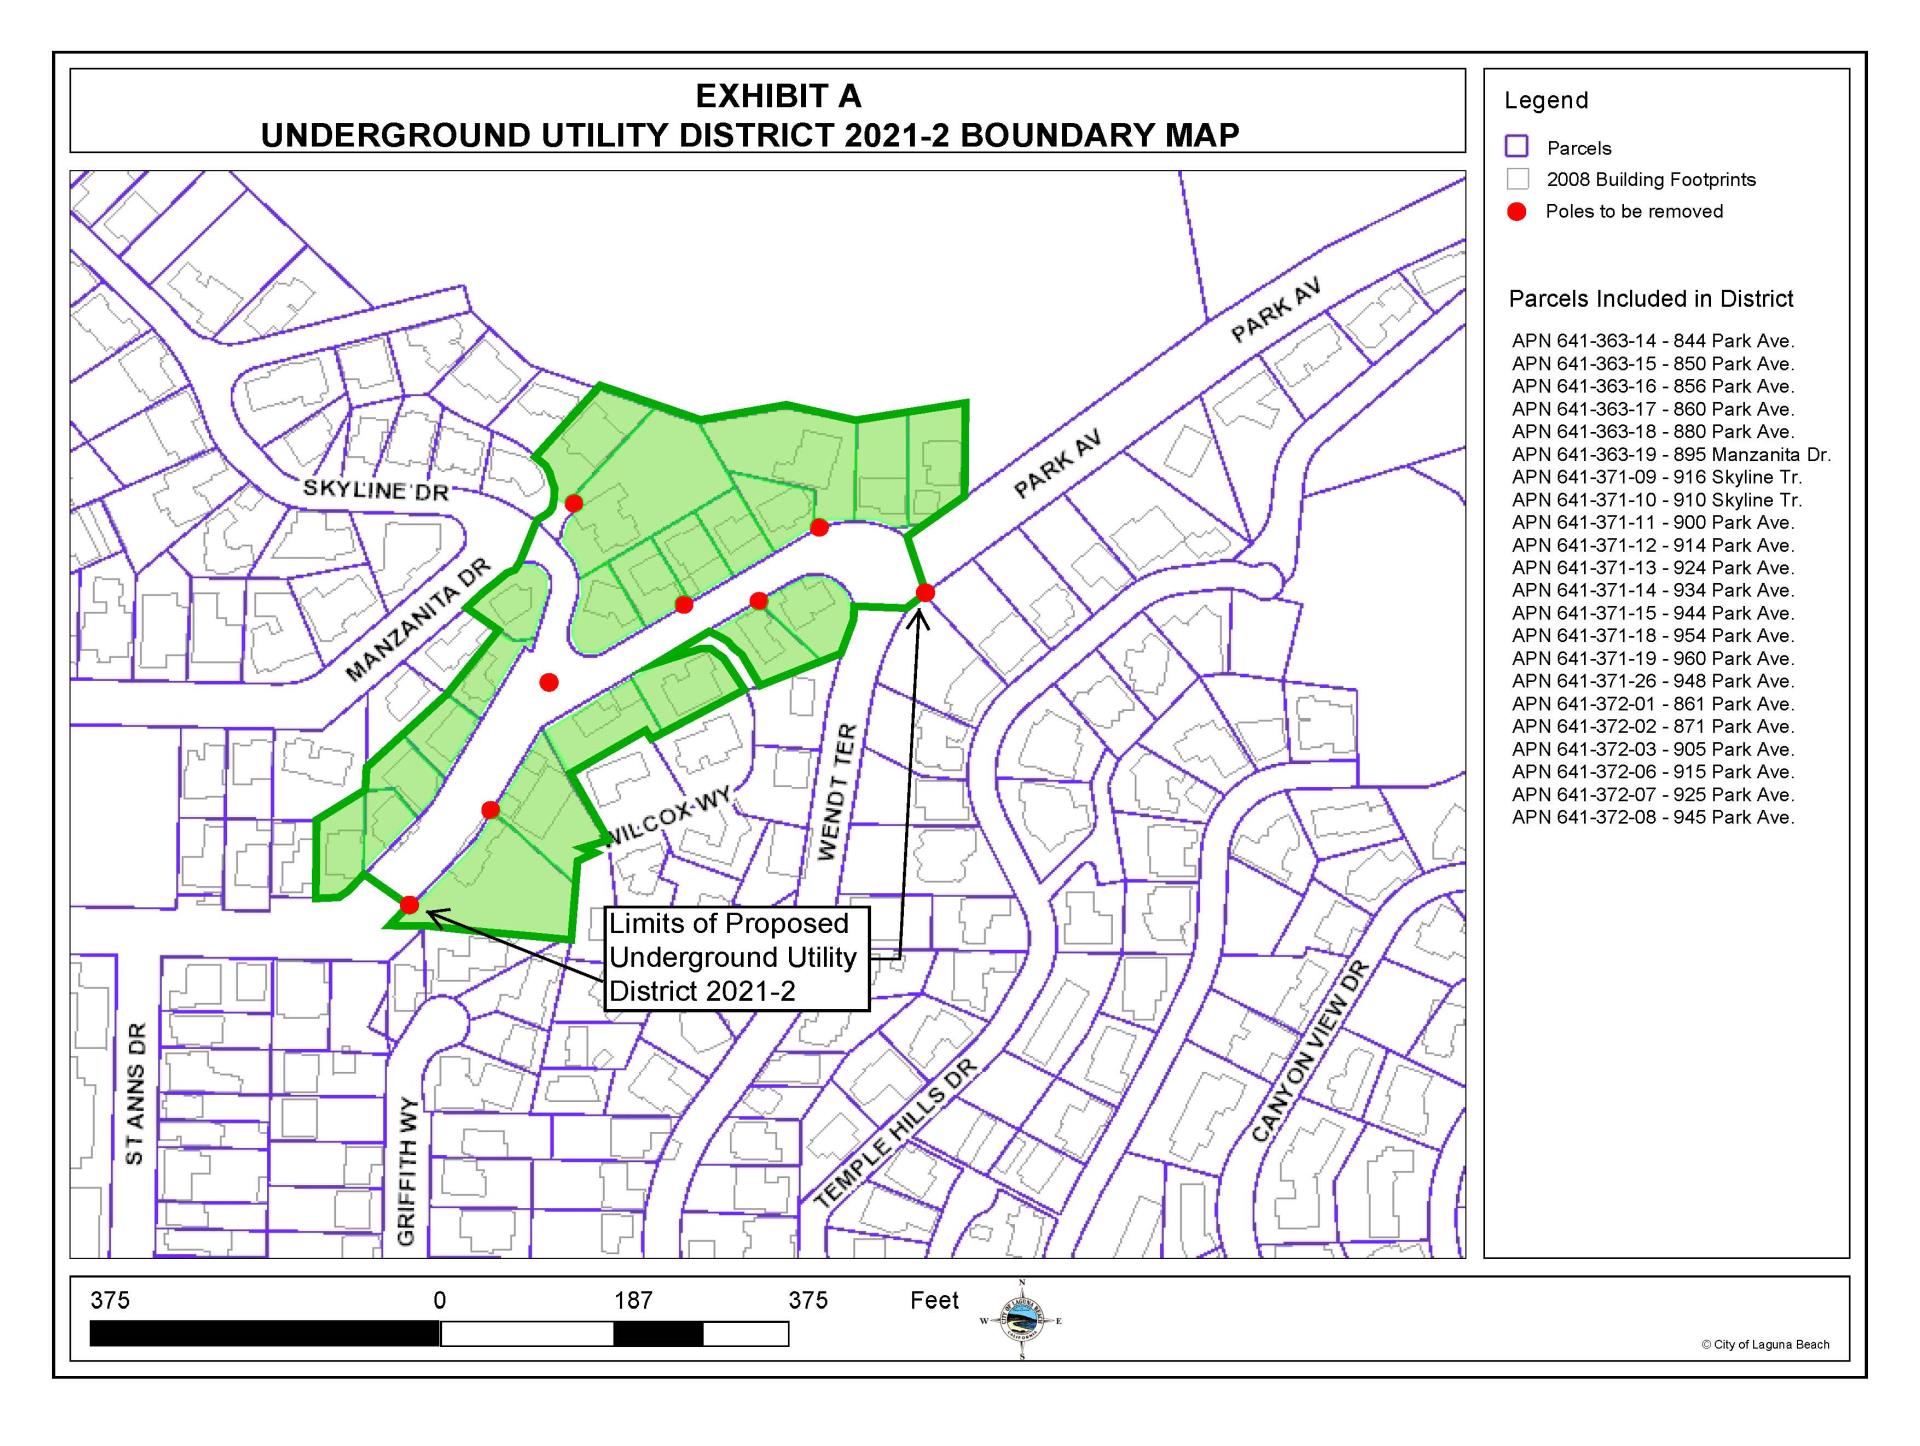 Park Ave Underground District Map 20210512